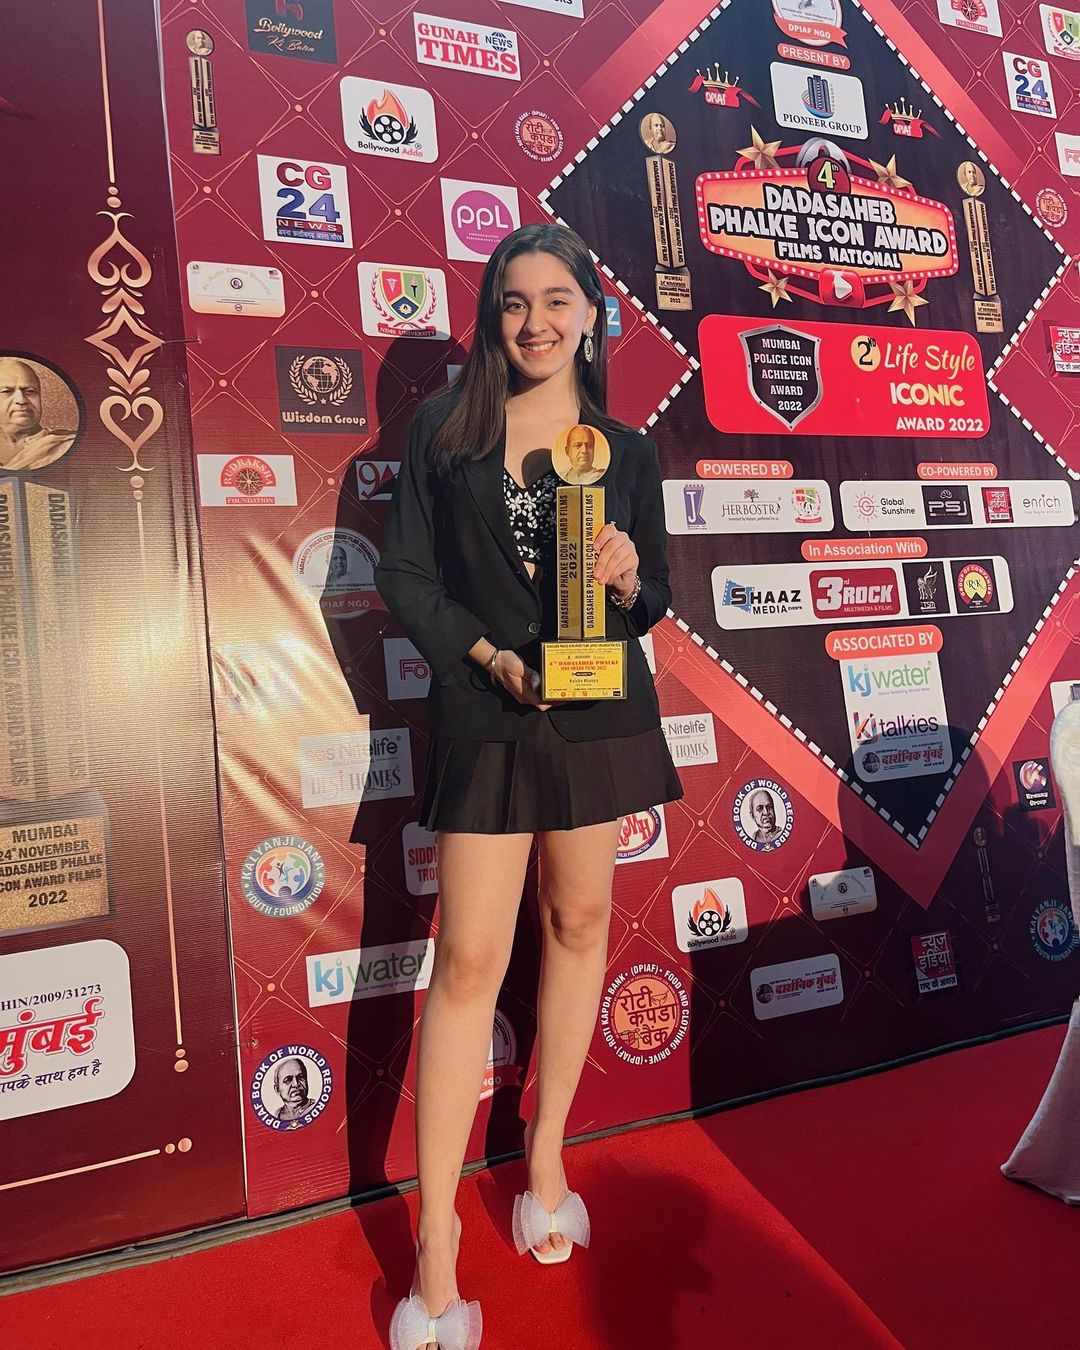 Naisha Khanna with Best Child Artist Award won at the 4th Dadasaheb Phalke Icon Award Films 2022